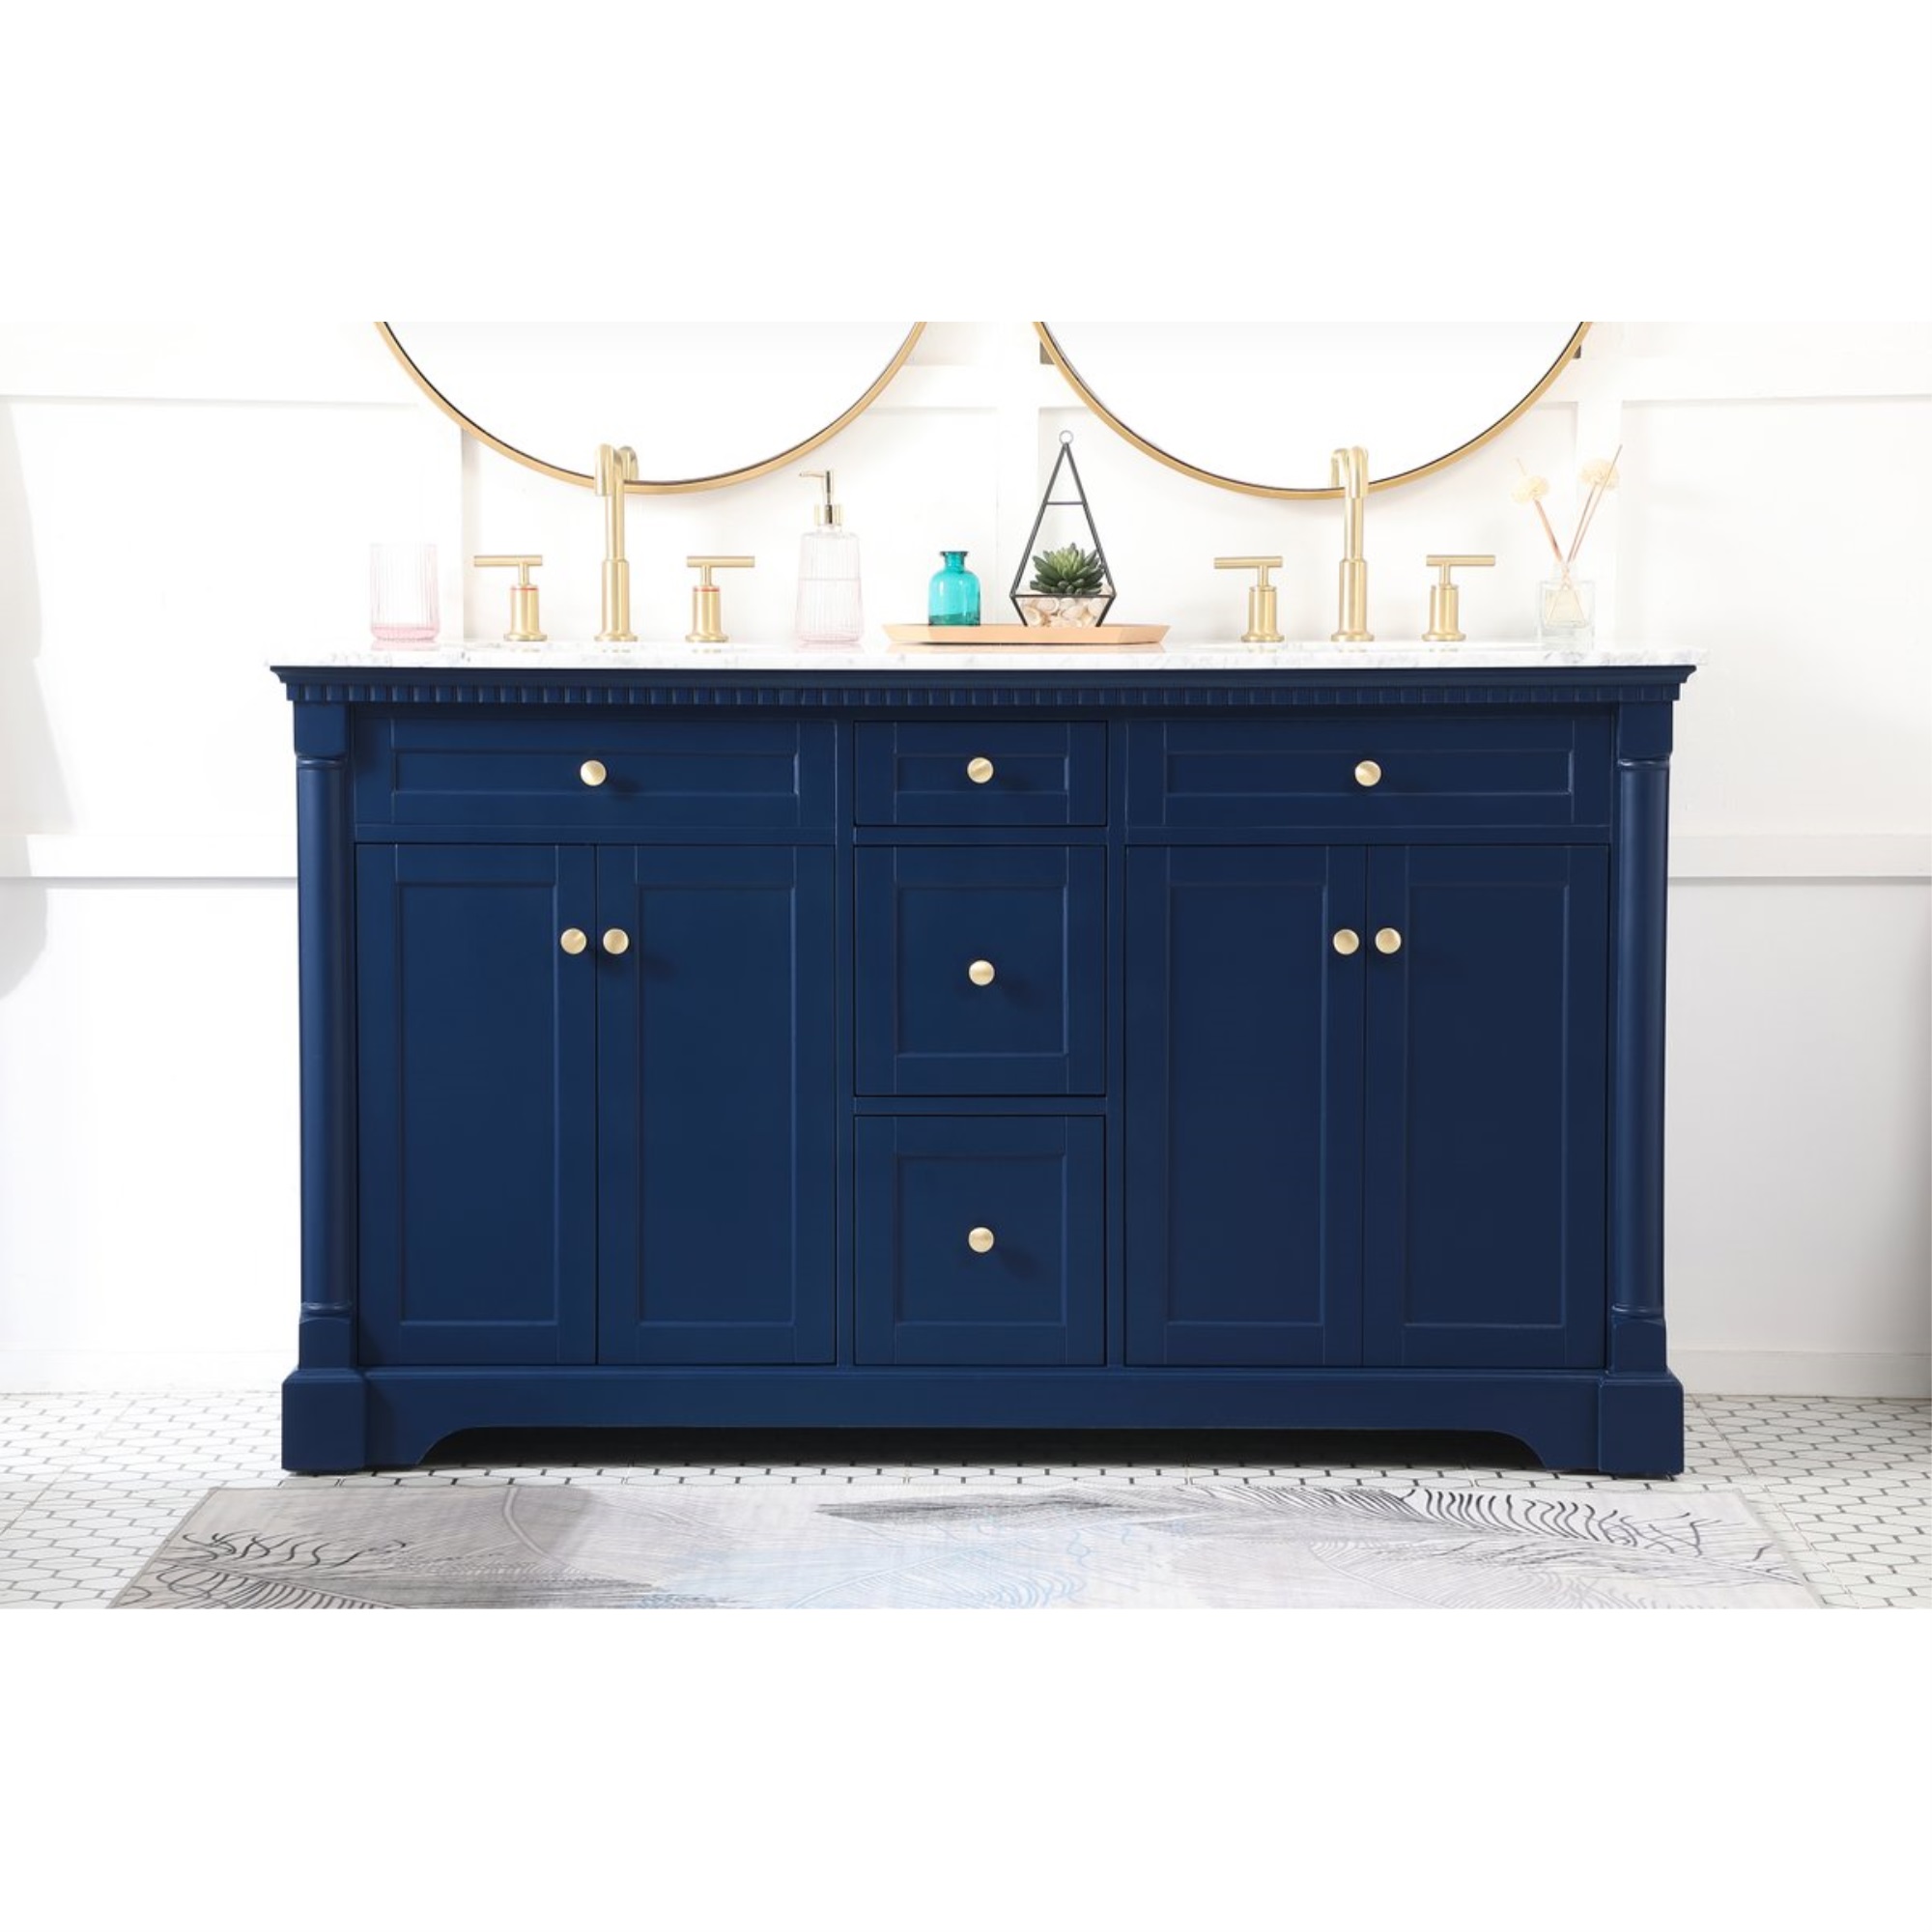 Elegant Decor 60 inch double bathroom vanity in Blue